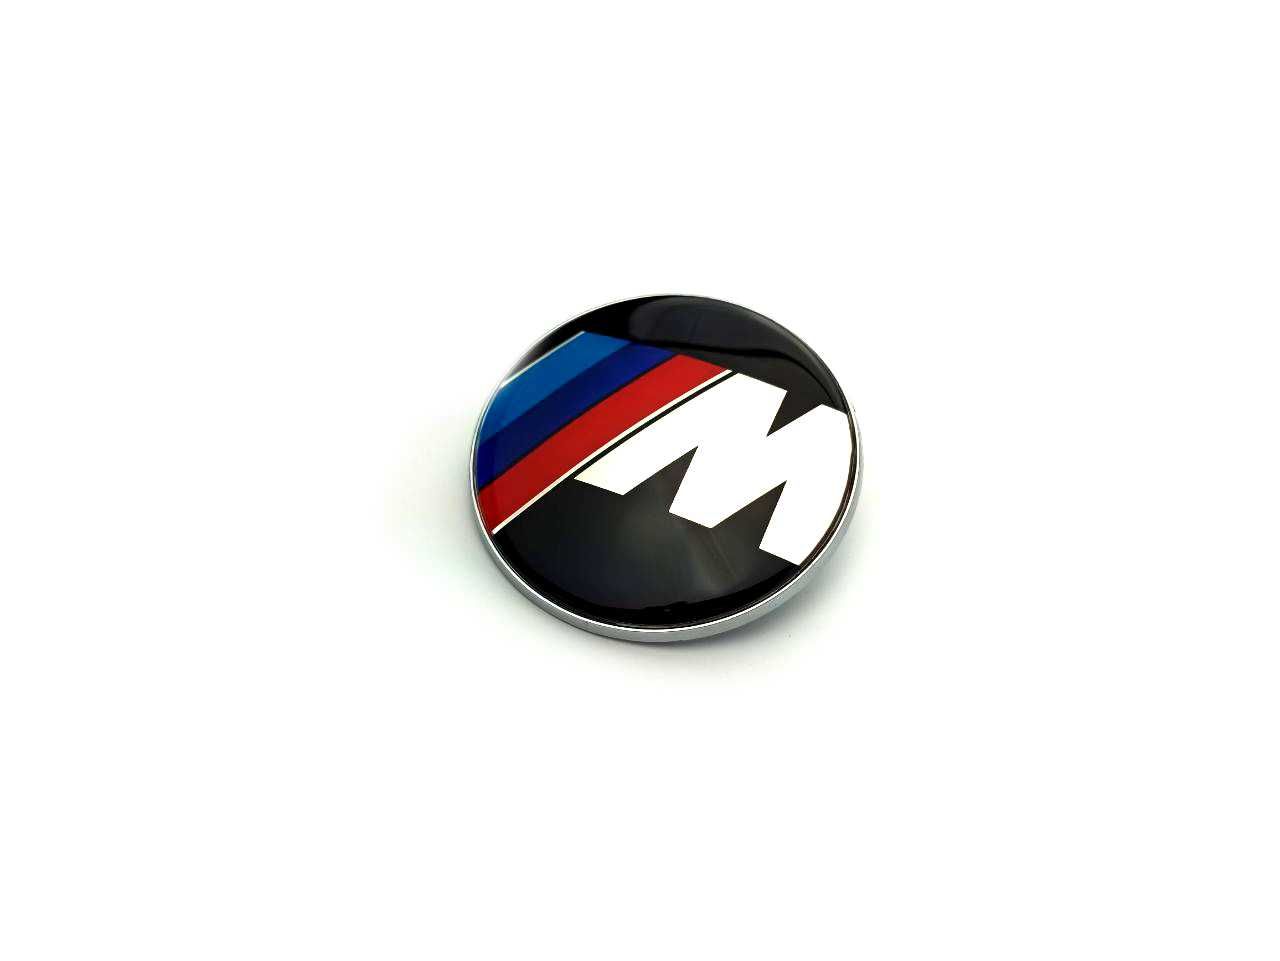 Znaczek emblemat logo BMW M 74mm e39 e36 e46 e90 e60